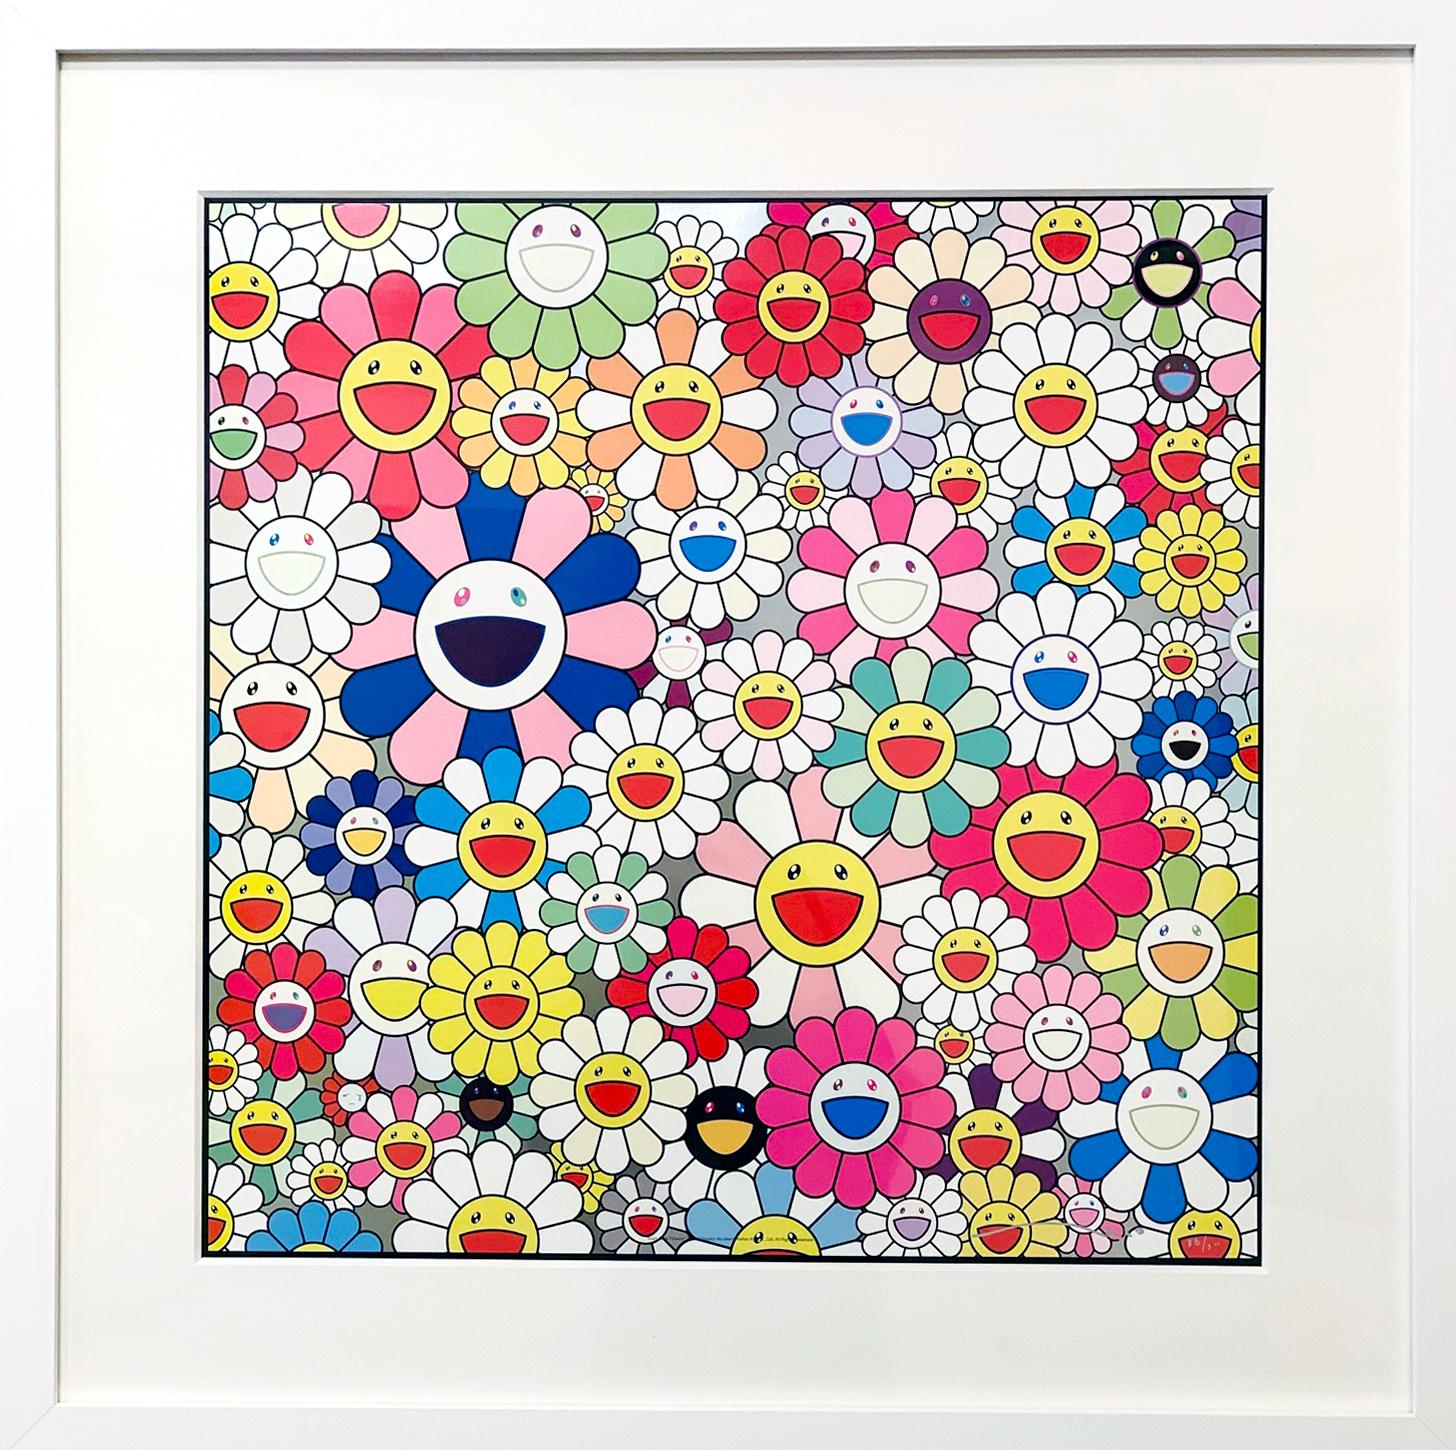 Such Cute Flowers  - Contemporary Print by Takashi Murakami